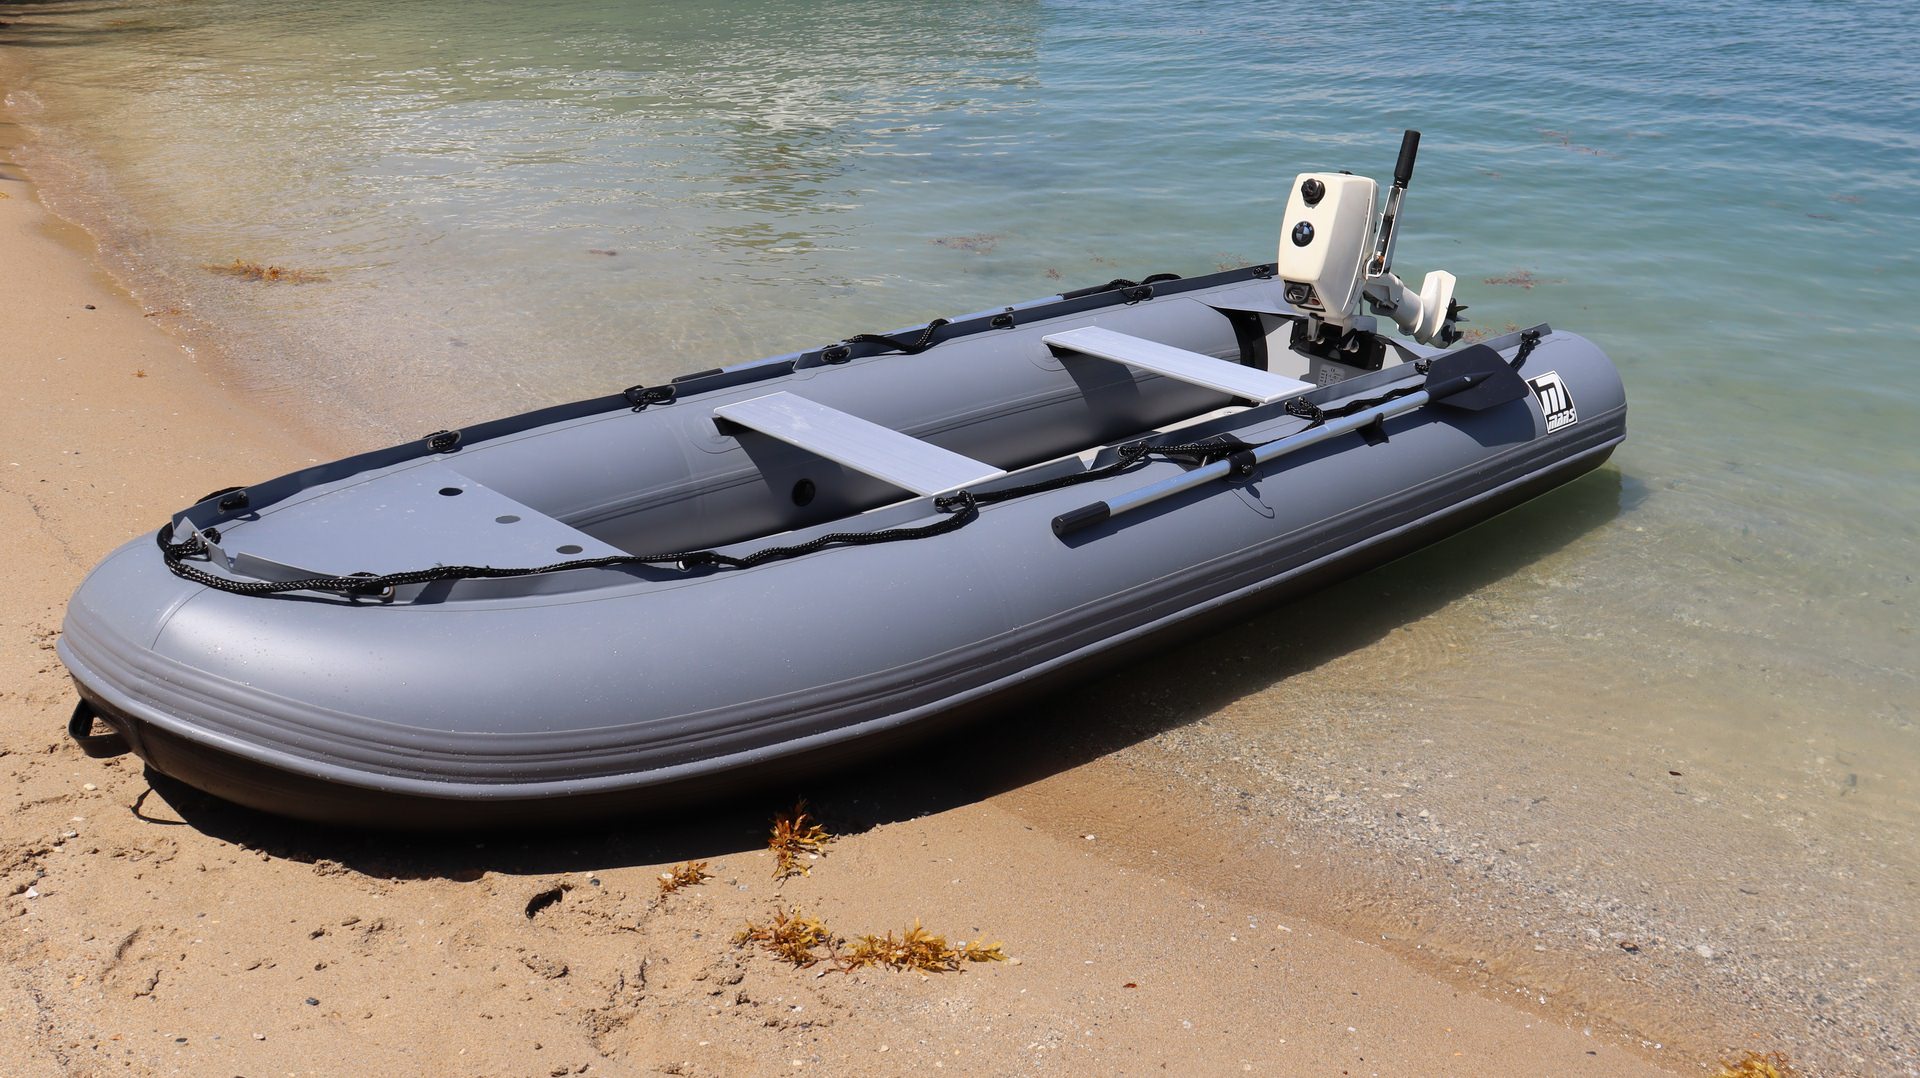 Saturn Inflatable Boat / Dinghy :: 13' Dinghy Tender :: 13' Saturn